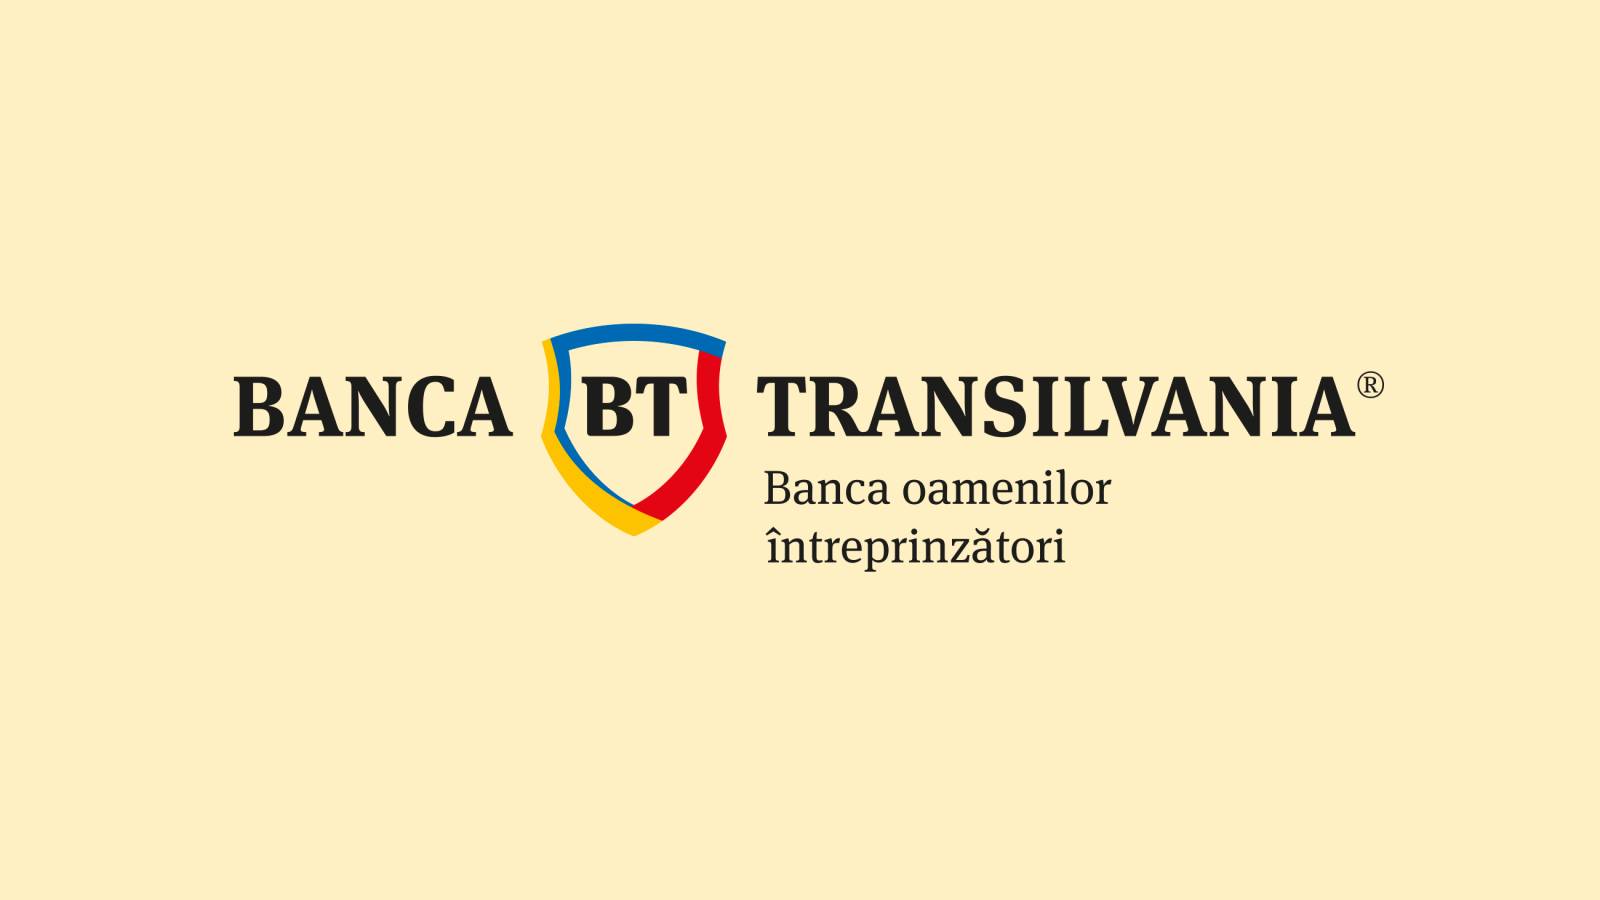 Clientii BANCA Transilvania ATENTIONATI NU Stiau TREBUIE Faca